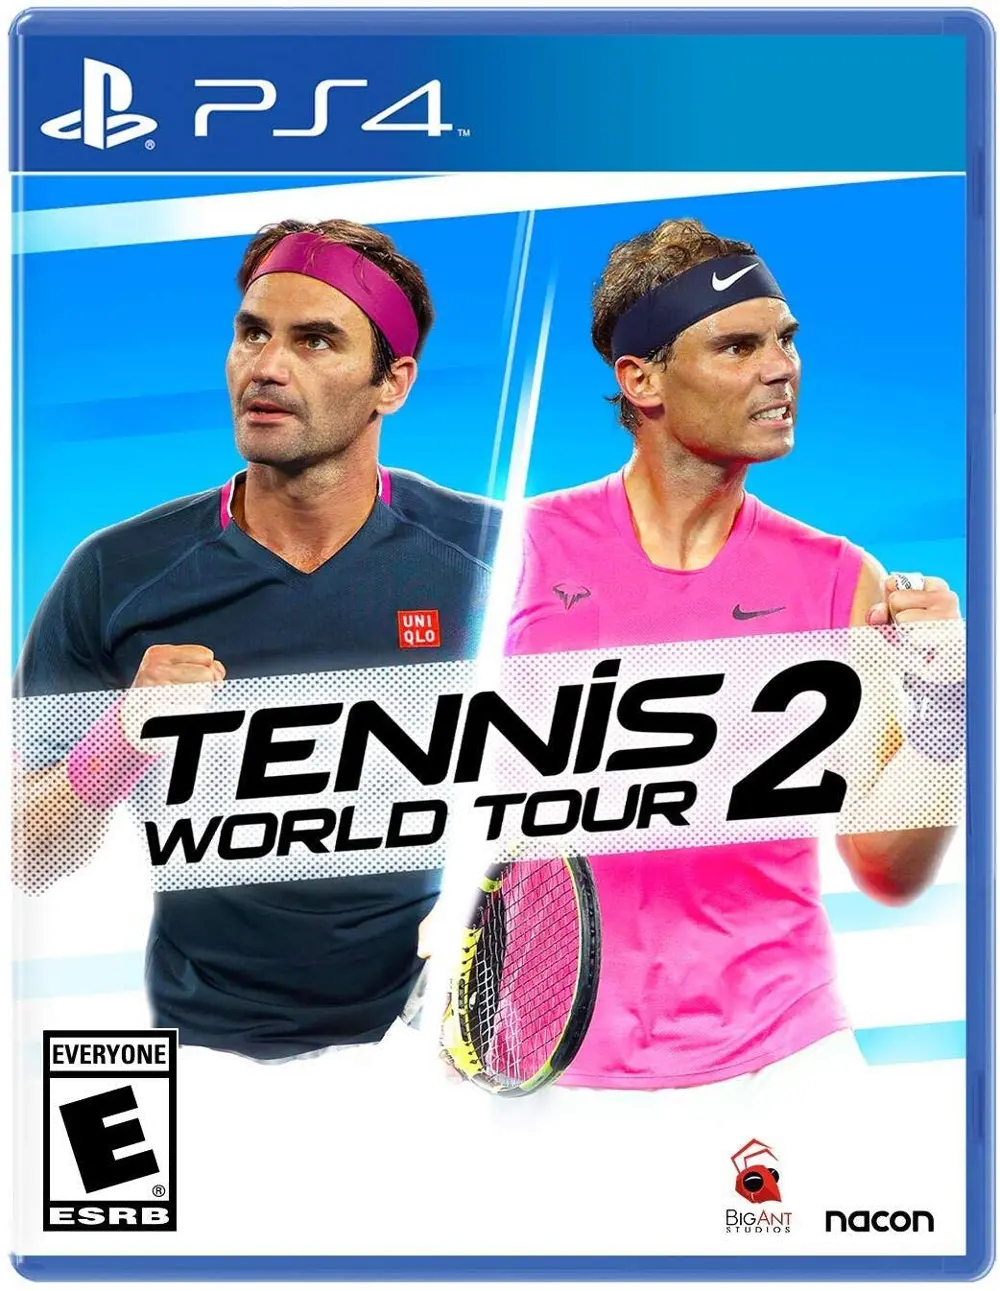 PS4 MAX 791587 Tennis World Tour 2 - PS4-1